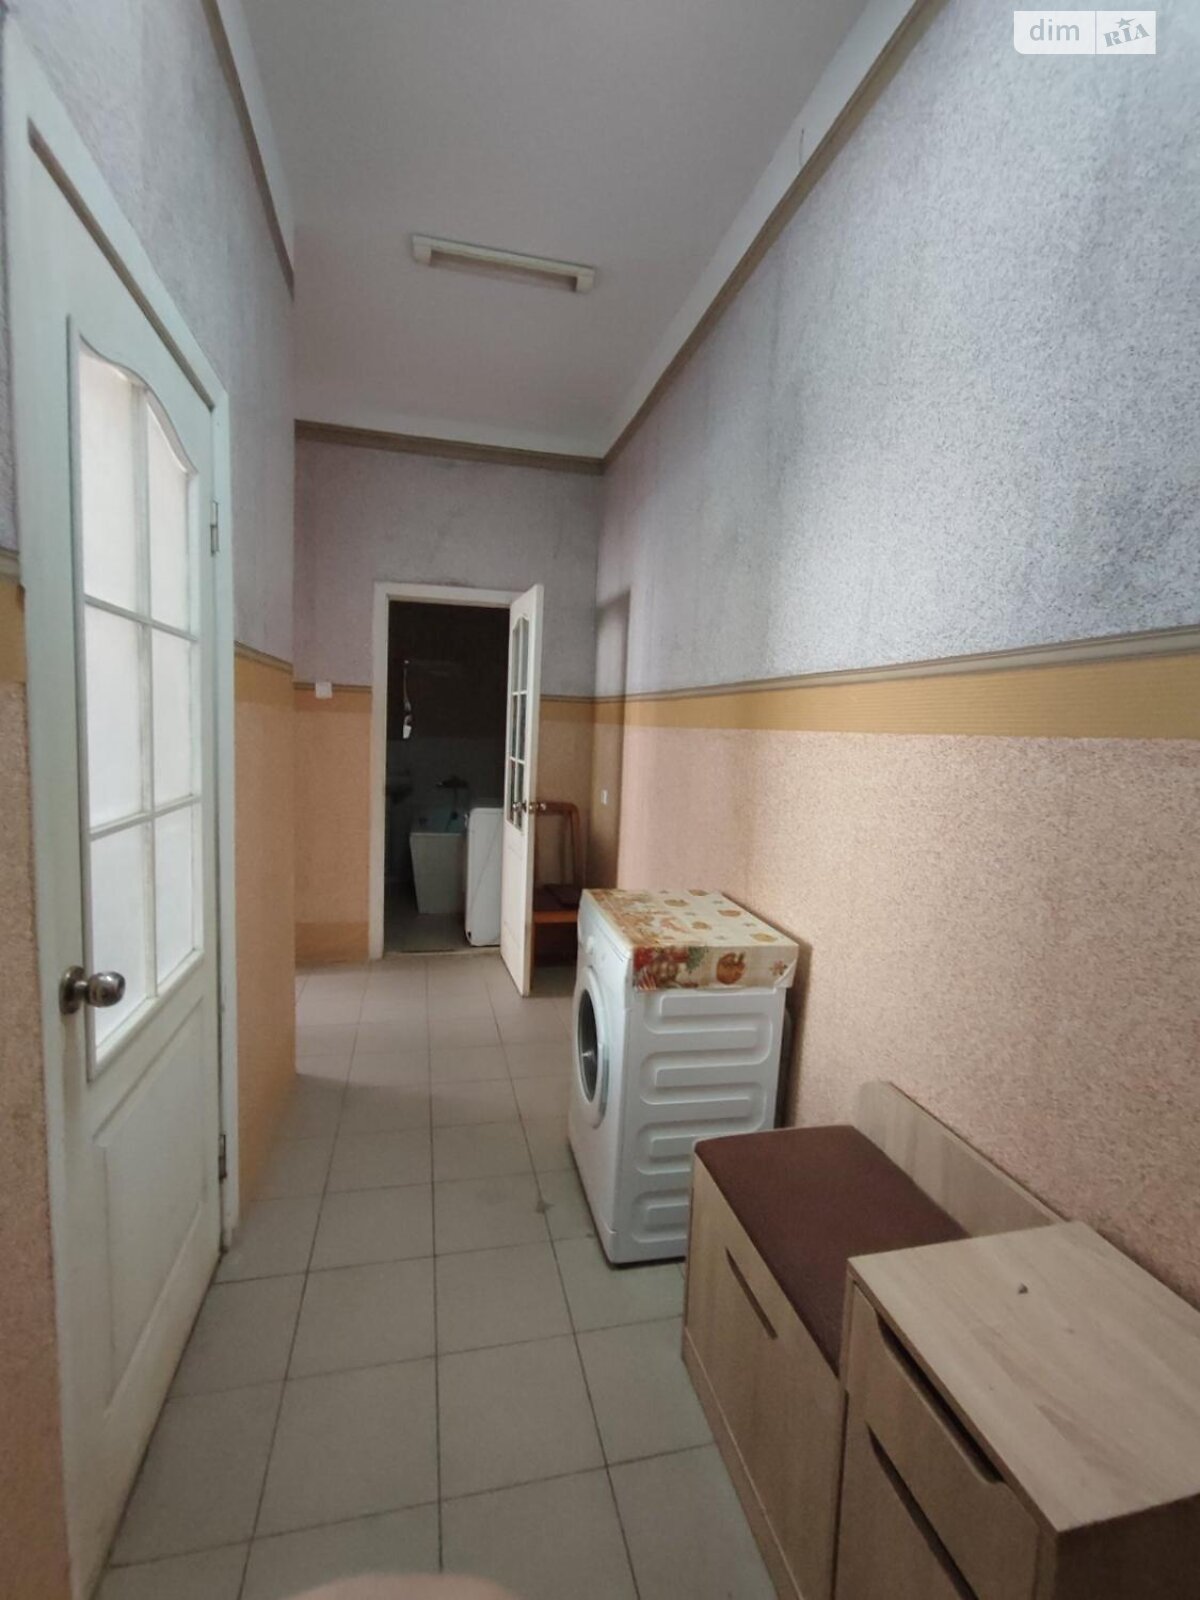 Продажа однокомнатной квартиры в Одессе, на ул. Академика Вильямса 43А, район Таирова фото 1